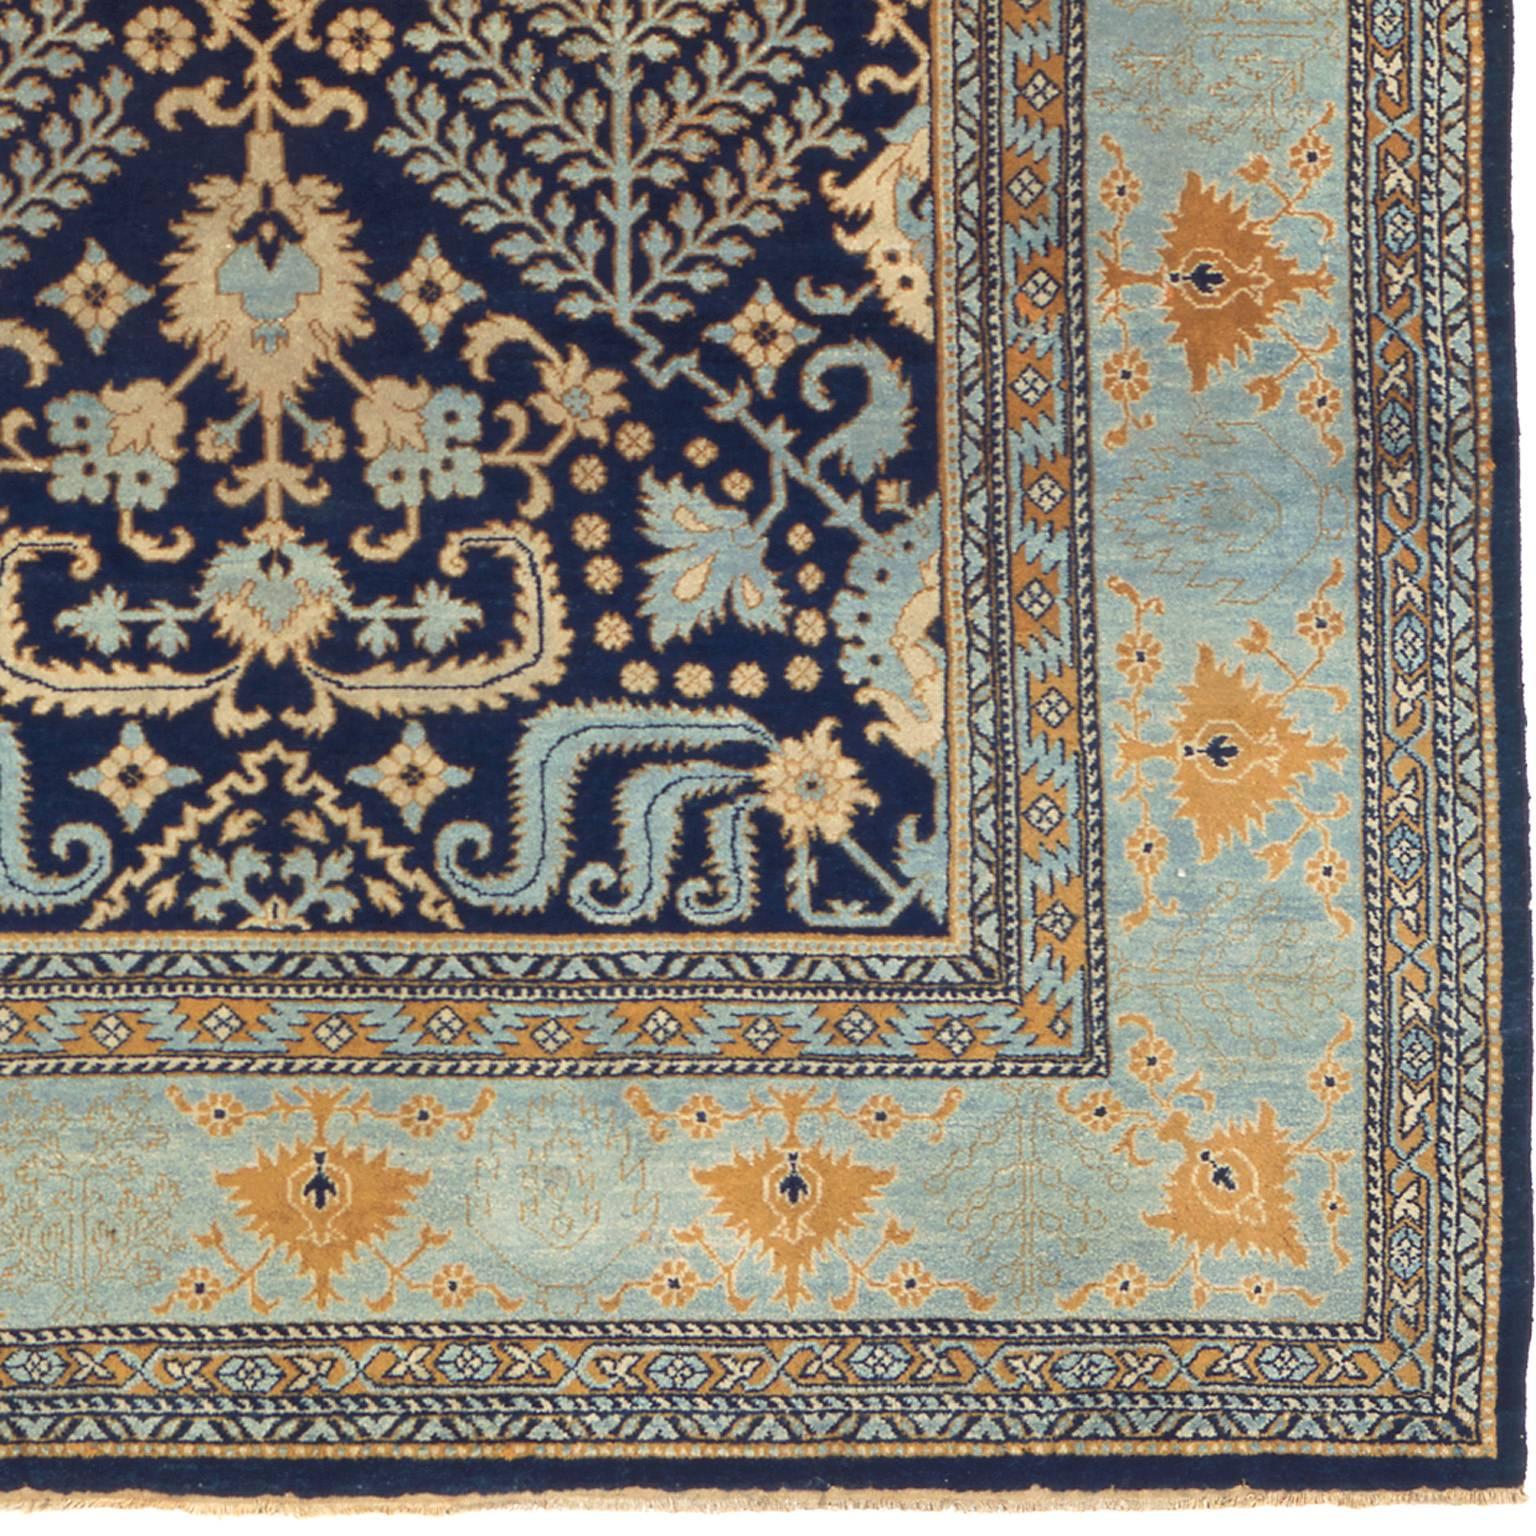 Early 20th century Agra carpet.